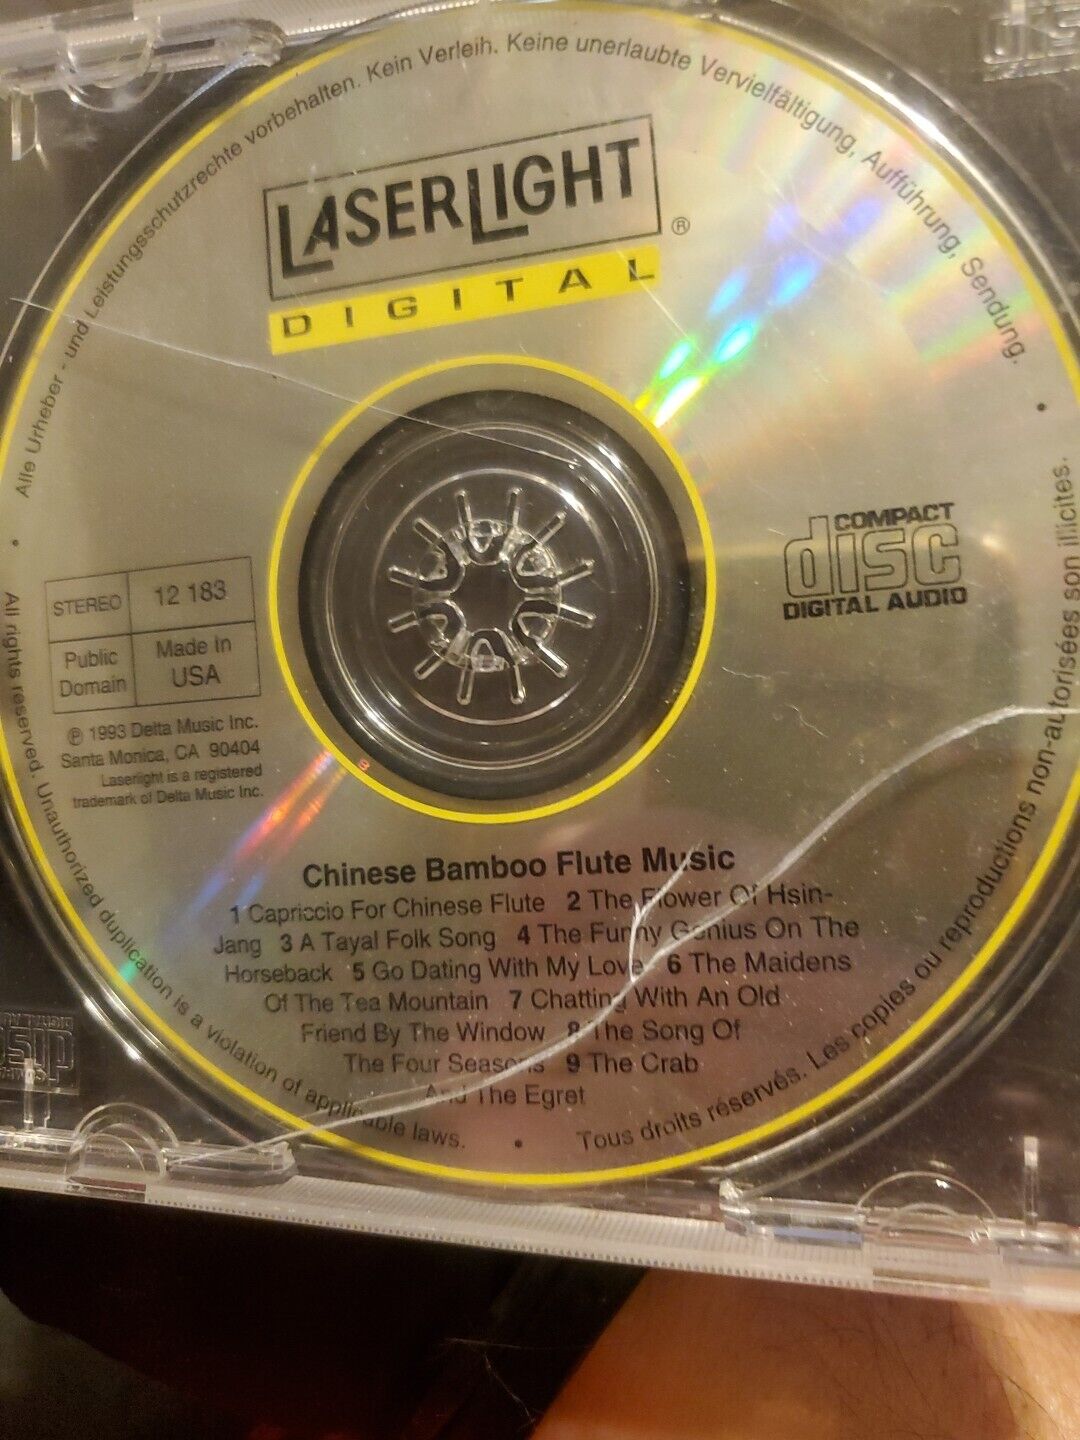 Chinese Bamboo Flute Music (CD, 1993, LaserLight Digital 12 183) New Sealed